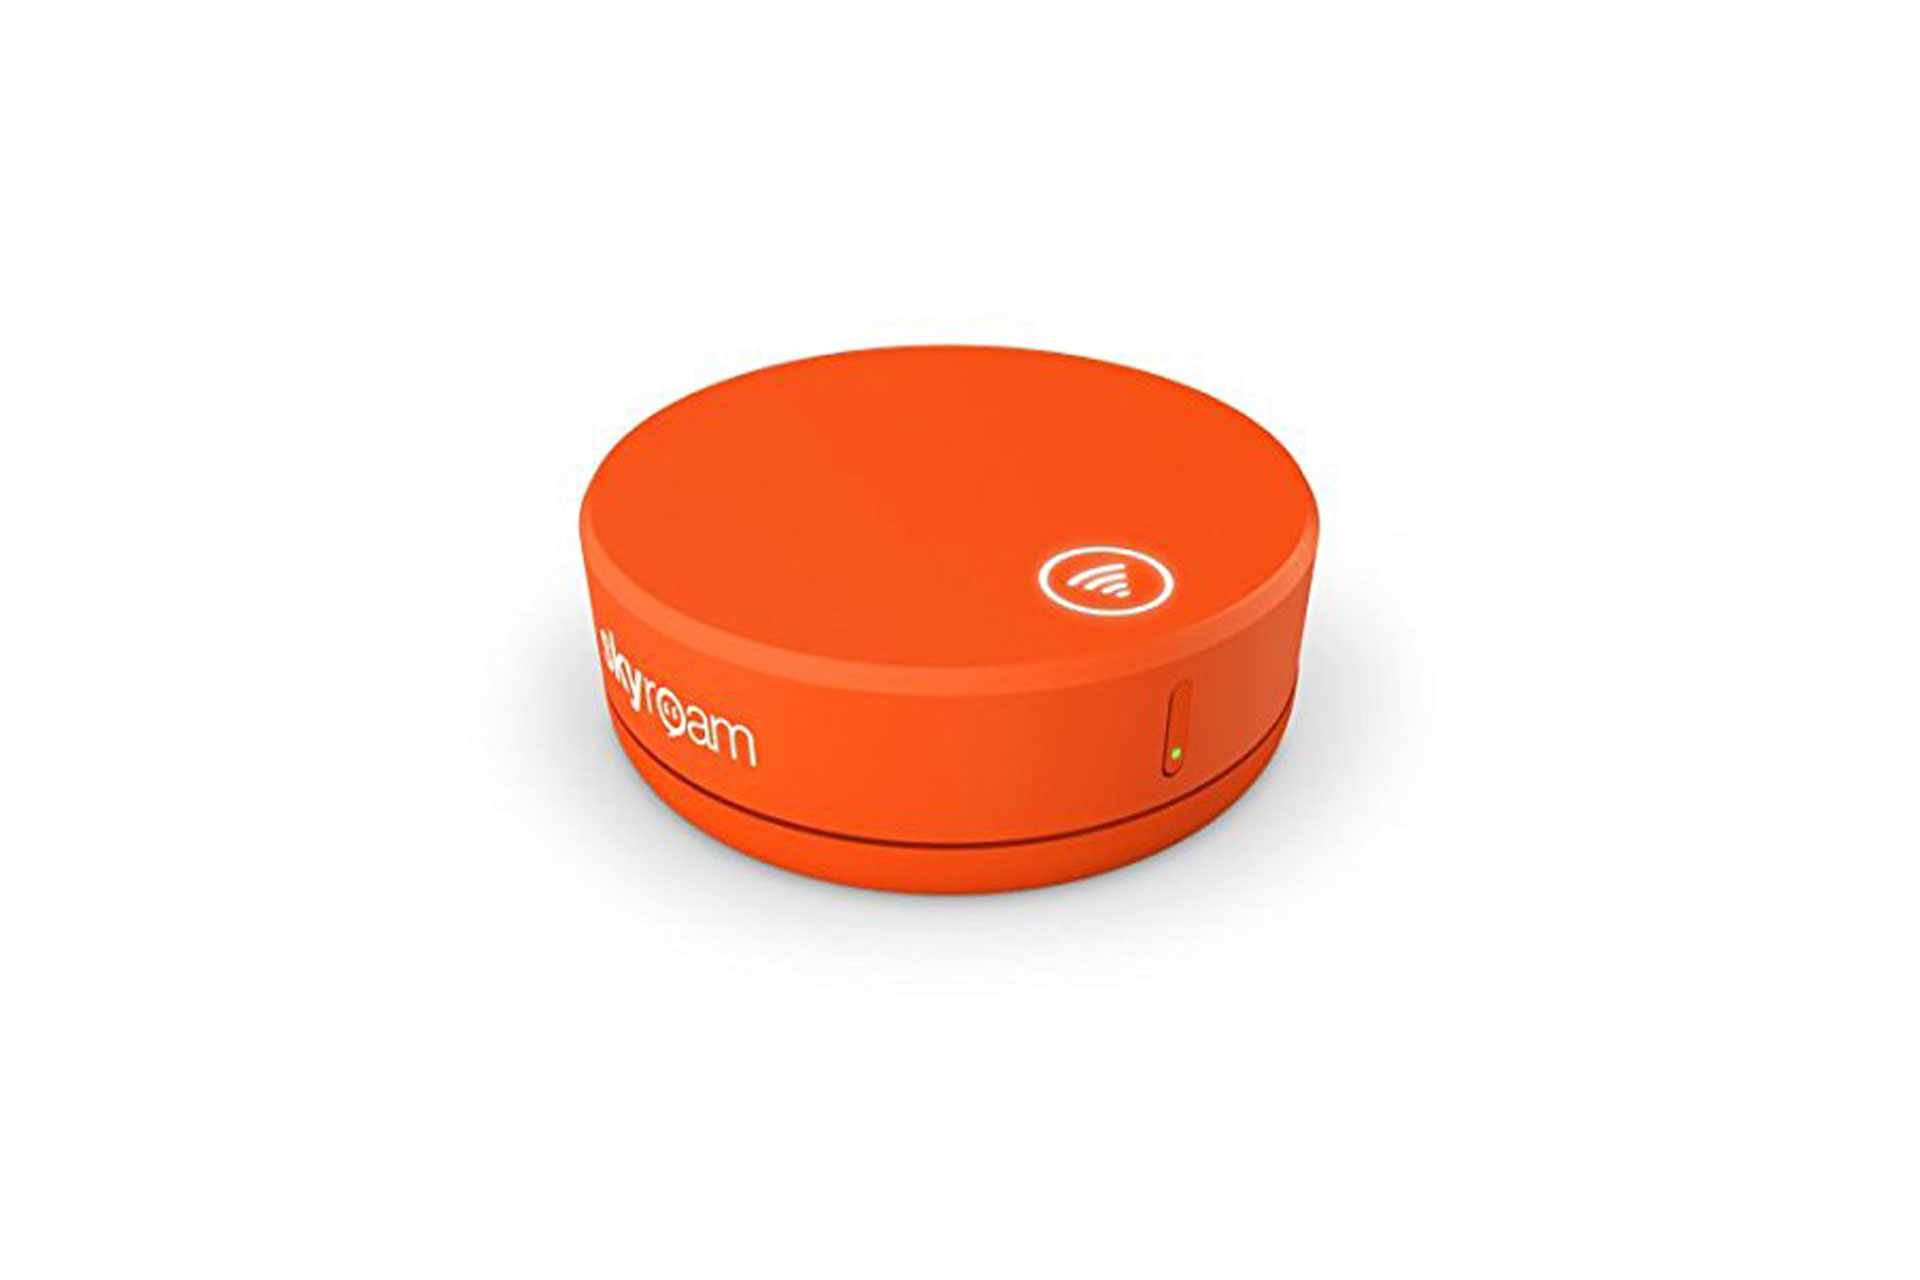 Skyroam Mobile Wi-Fi Hotspot